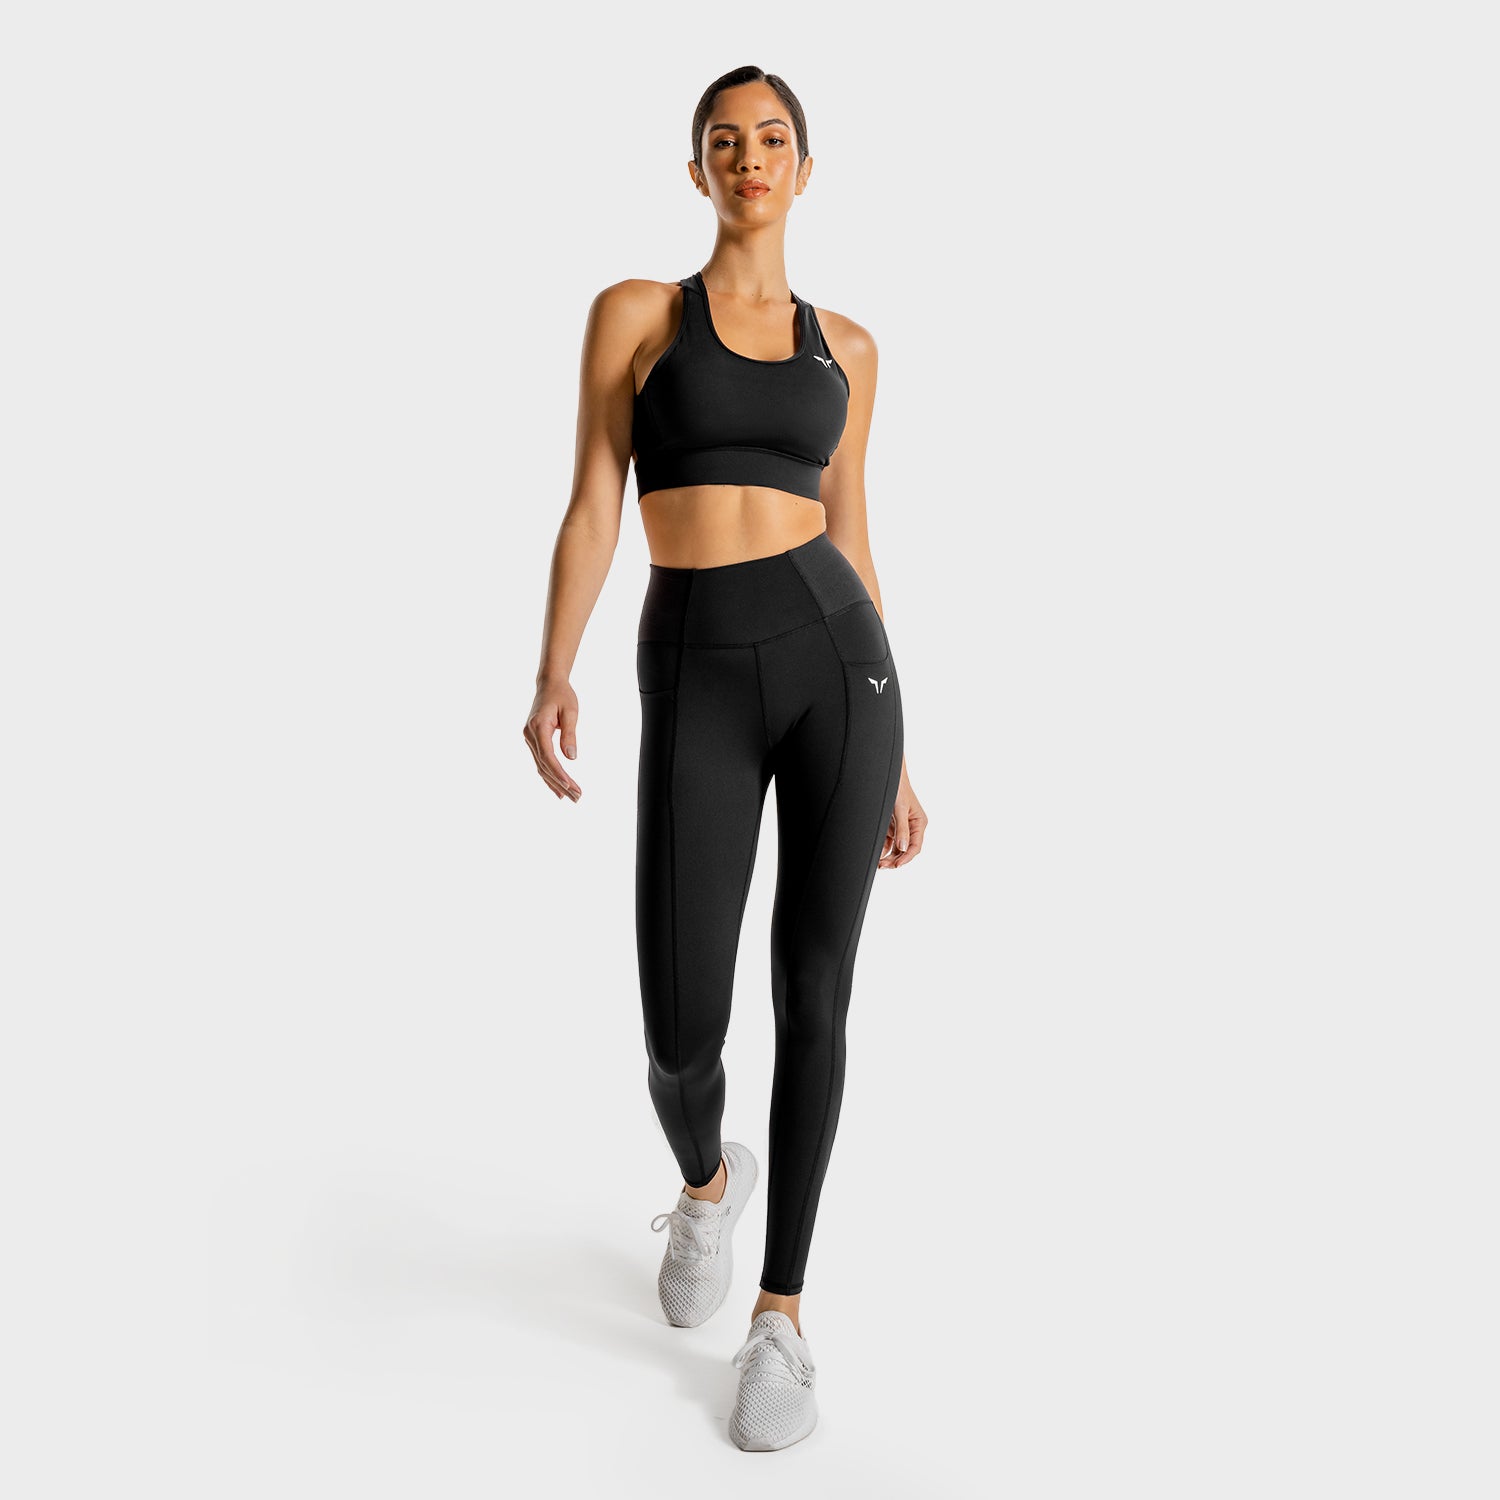 squatwolf-gym-leggings-for-women-core-leggings-78-black-workout-clothes